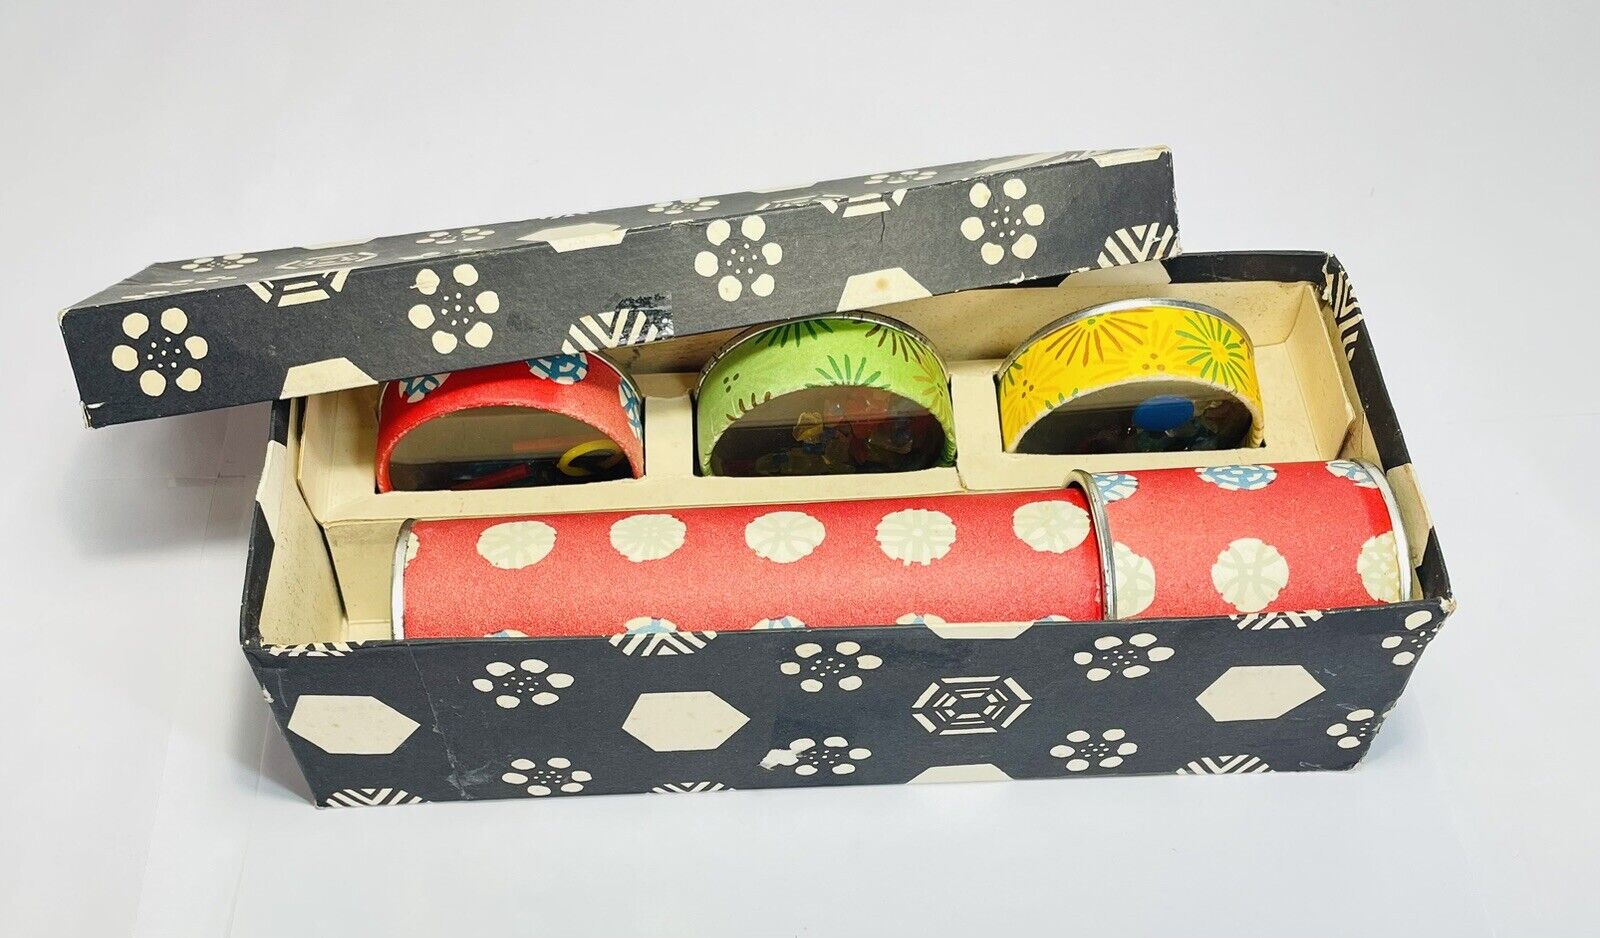 1960’s Vintage Japanese Kaleidoscope Classic Toy Original Box 9” Collectible